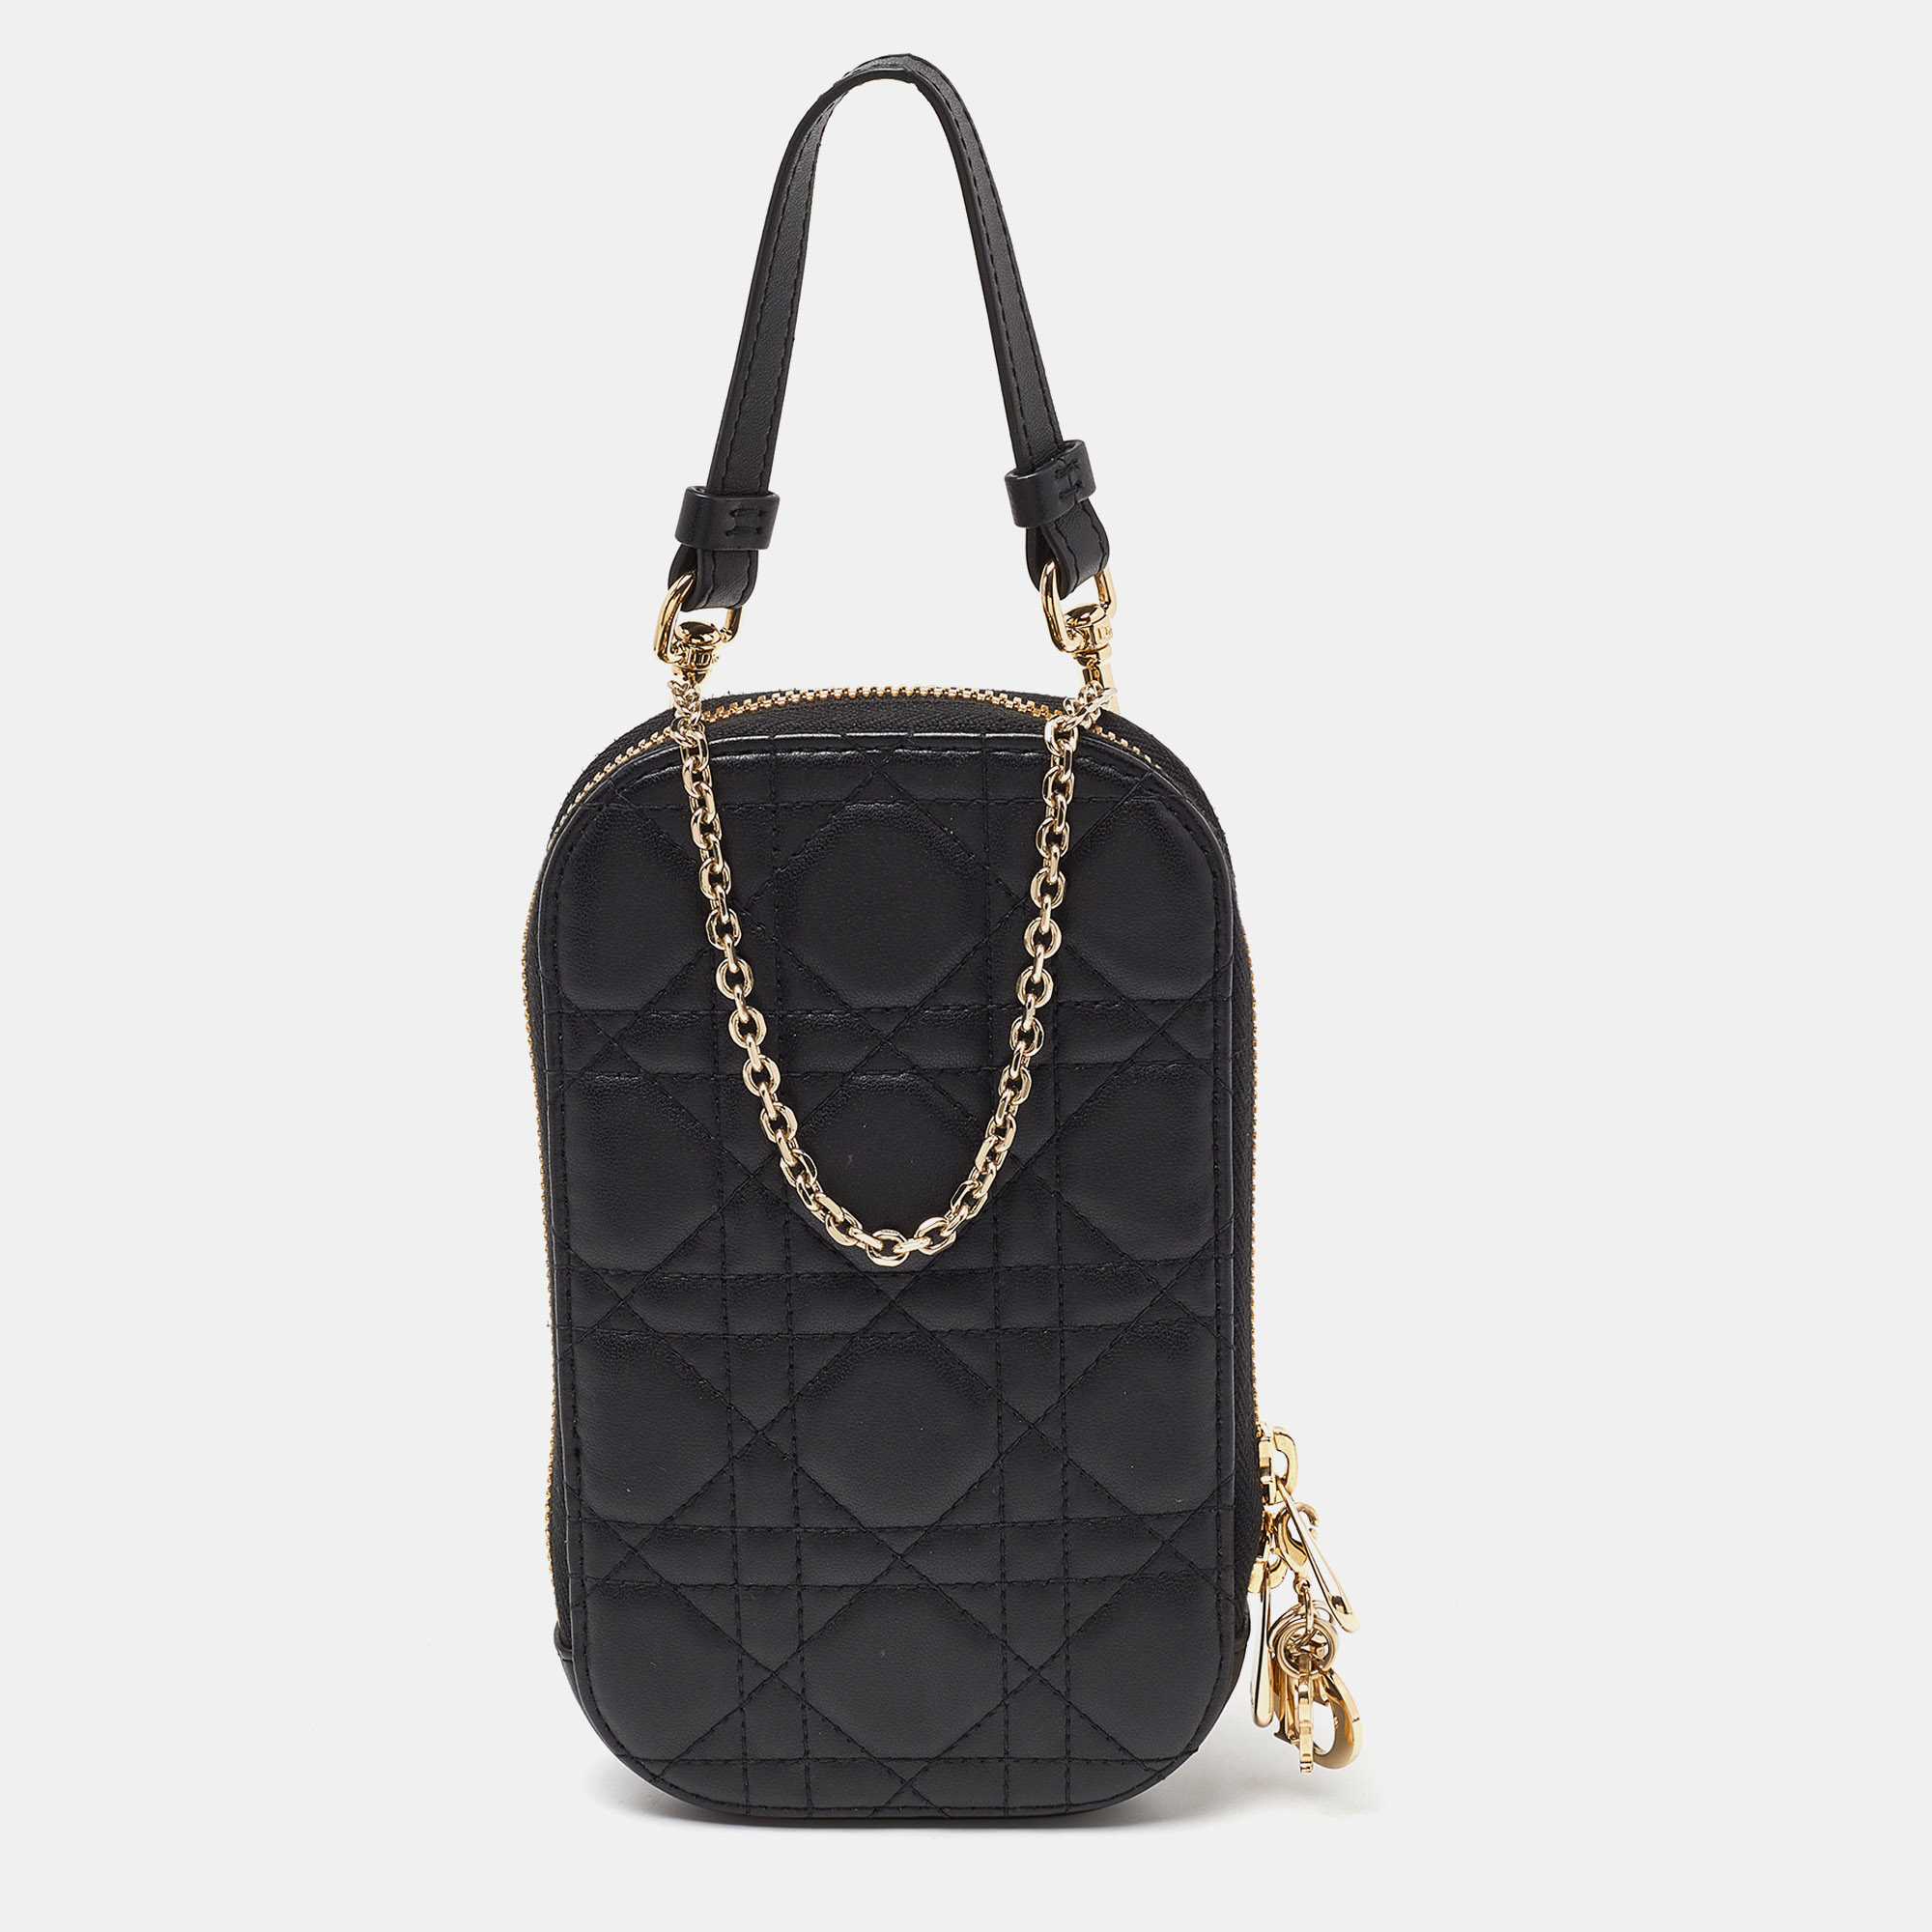 Dior black cannage leather lady dior chain phone holder crossbody bag